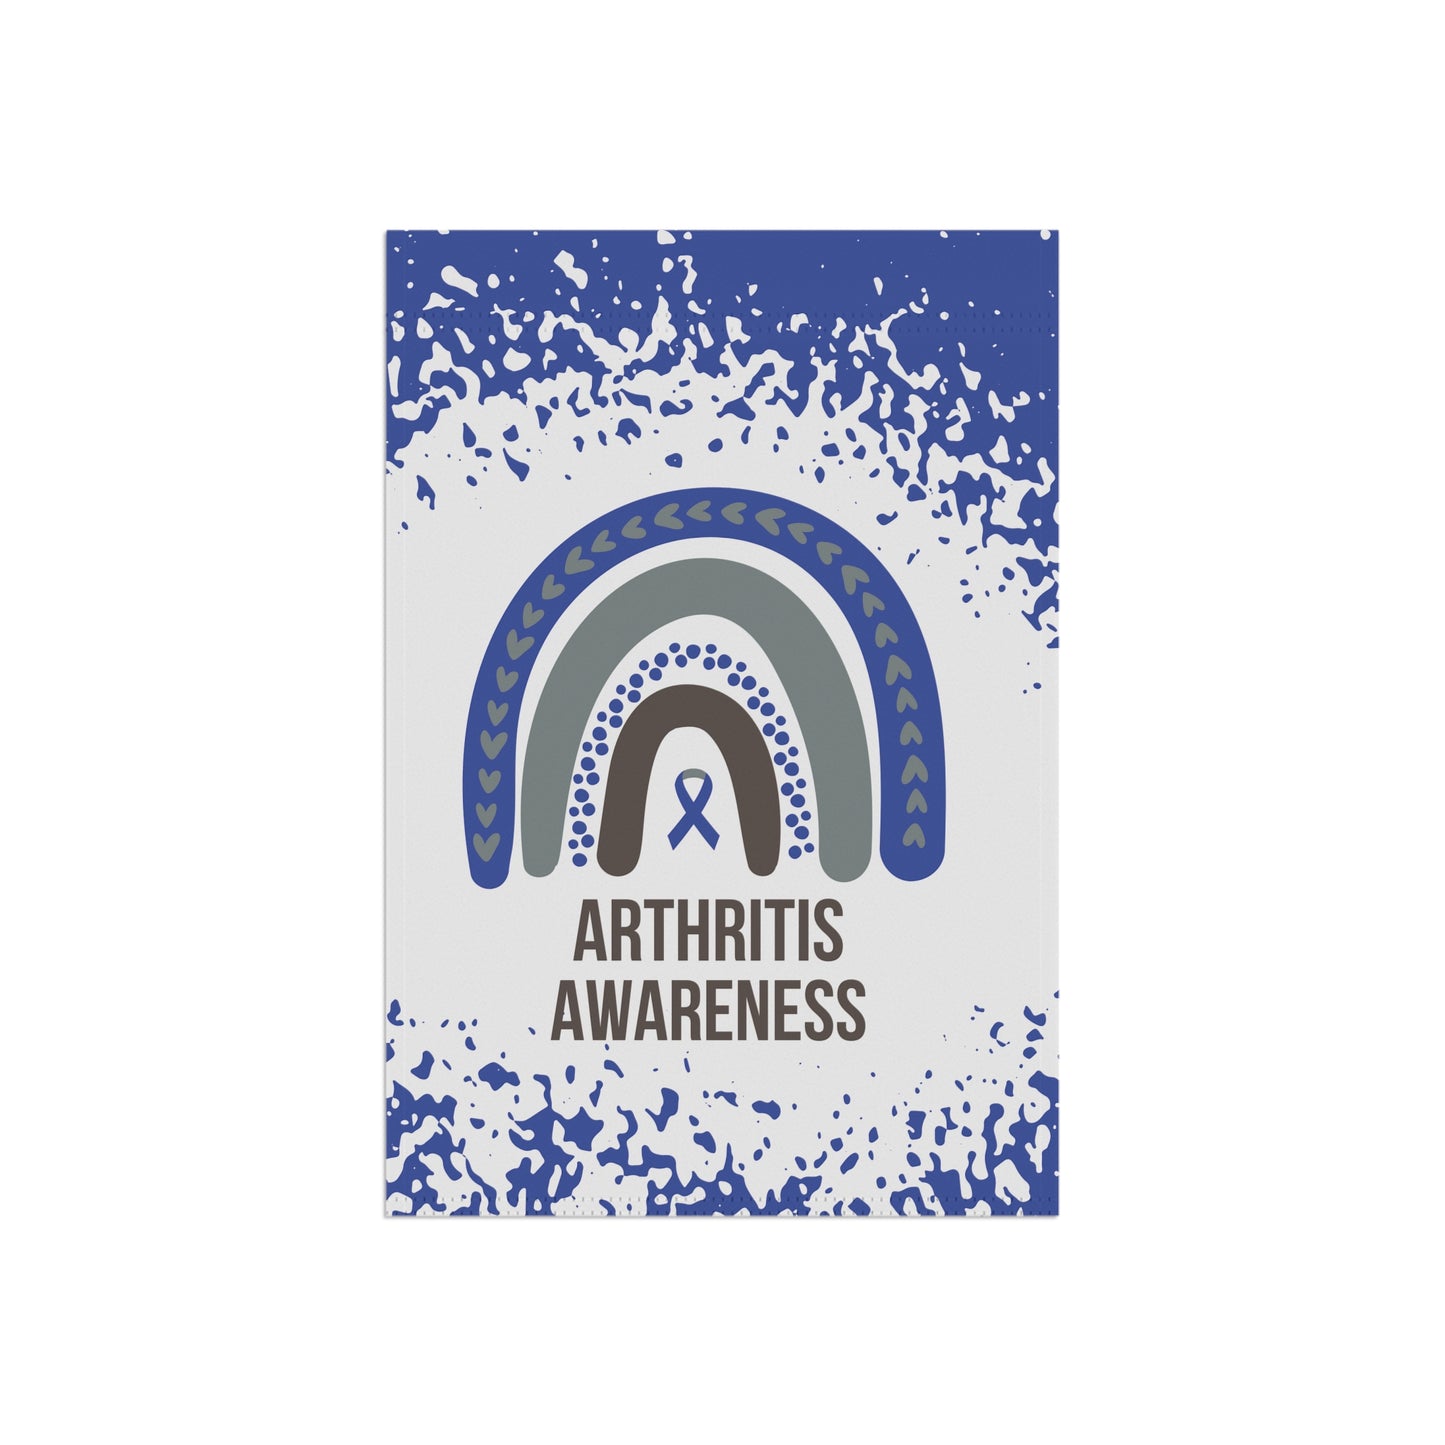 Arthritis Awareness Garden Flag | Welcome Sign |  New Home | Decorative House Banner | Blue Awareness Ribbon  | Support